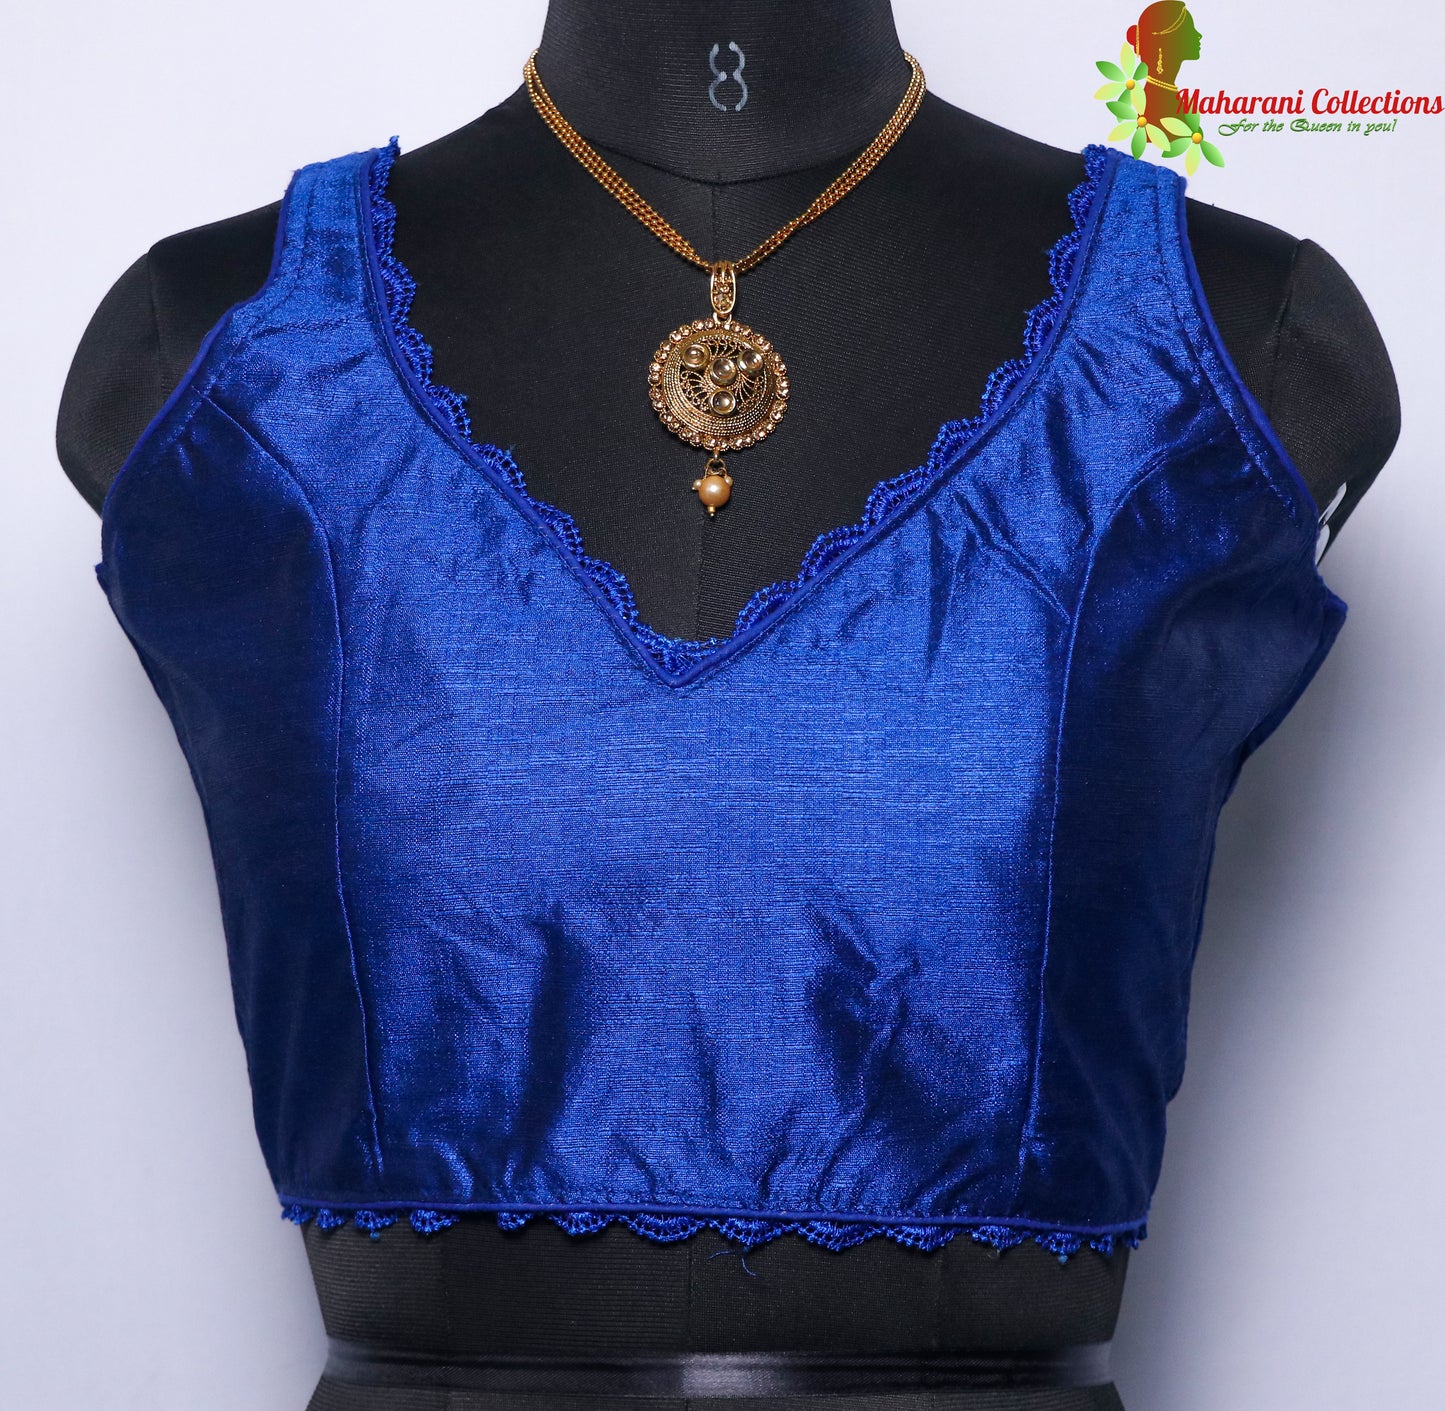 Maharani's Linen Silk Lace Blouse - Blue